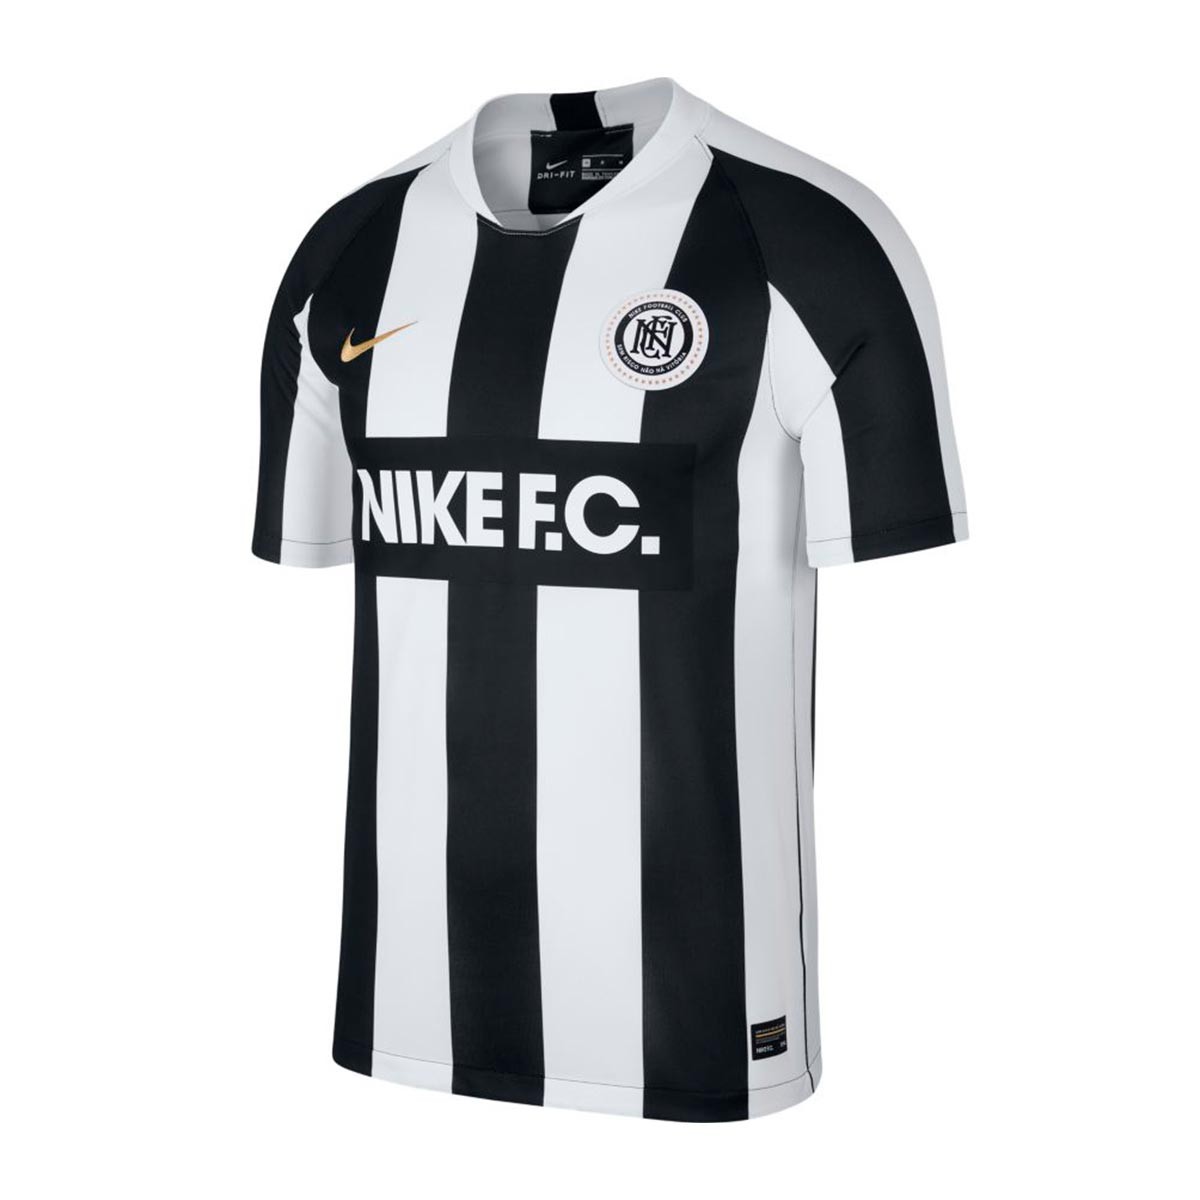 Camiseta Nike Nike F.C. Primera Equipación White-Black-Metallic 